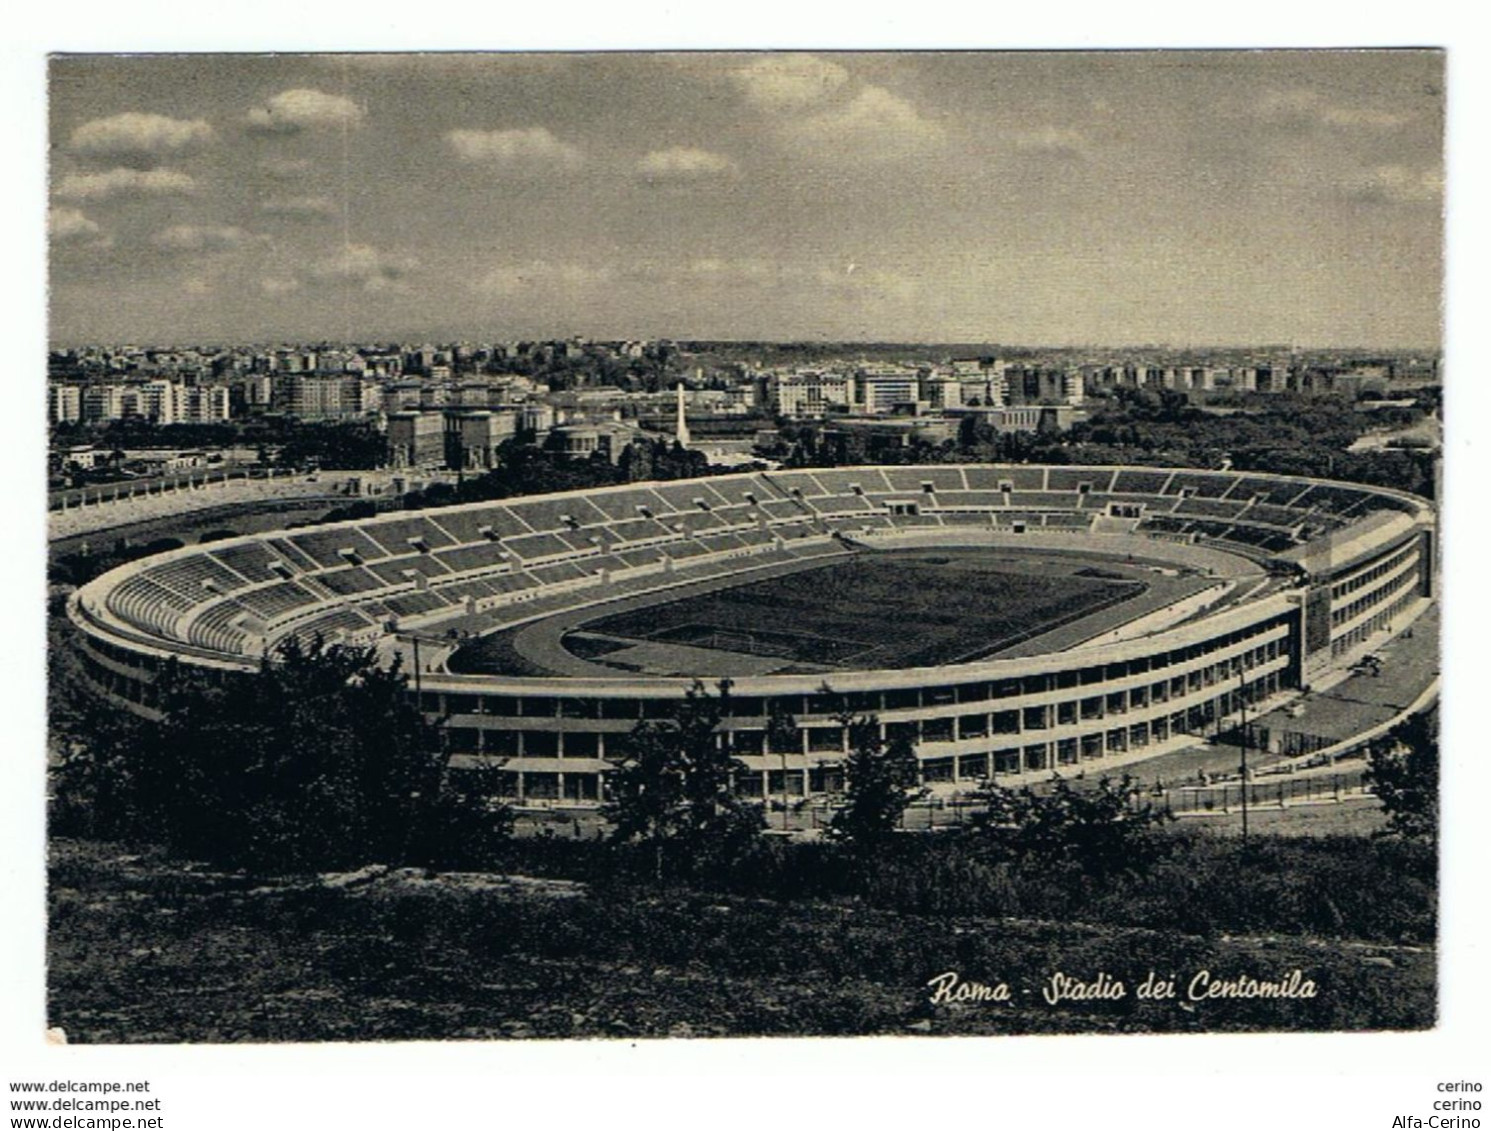 ROMA:  STADIO  DEI  CENTOMILA  -  FG - Stadiums & Sporting Infrastructures